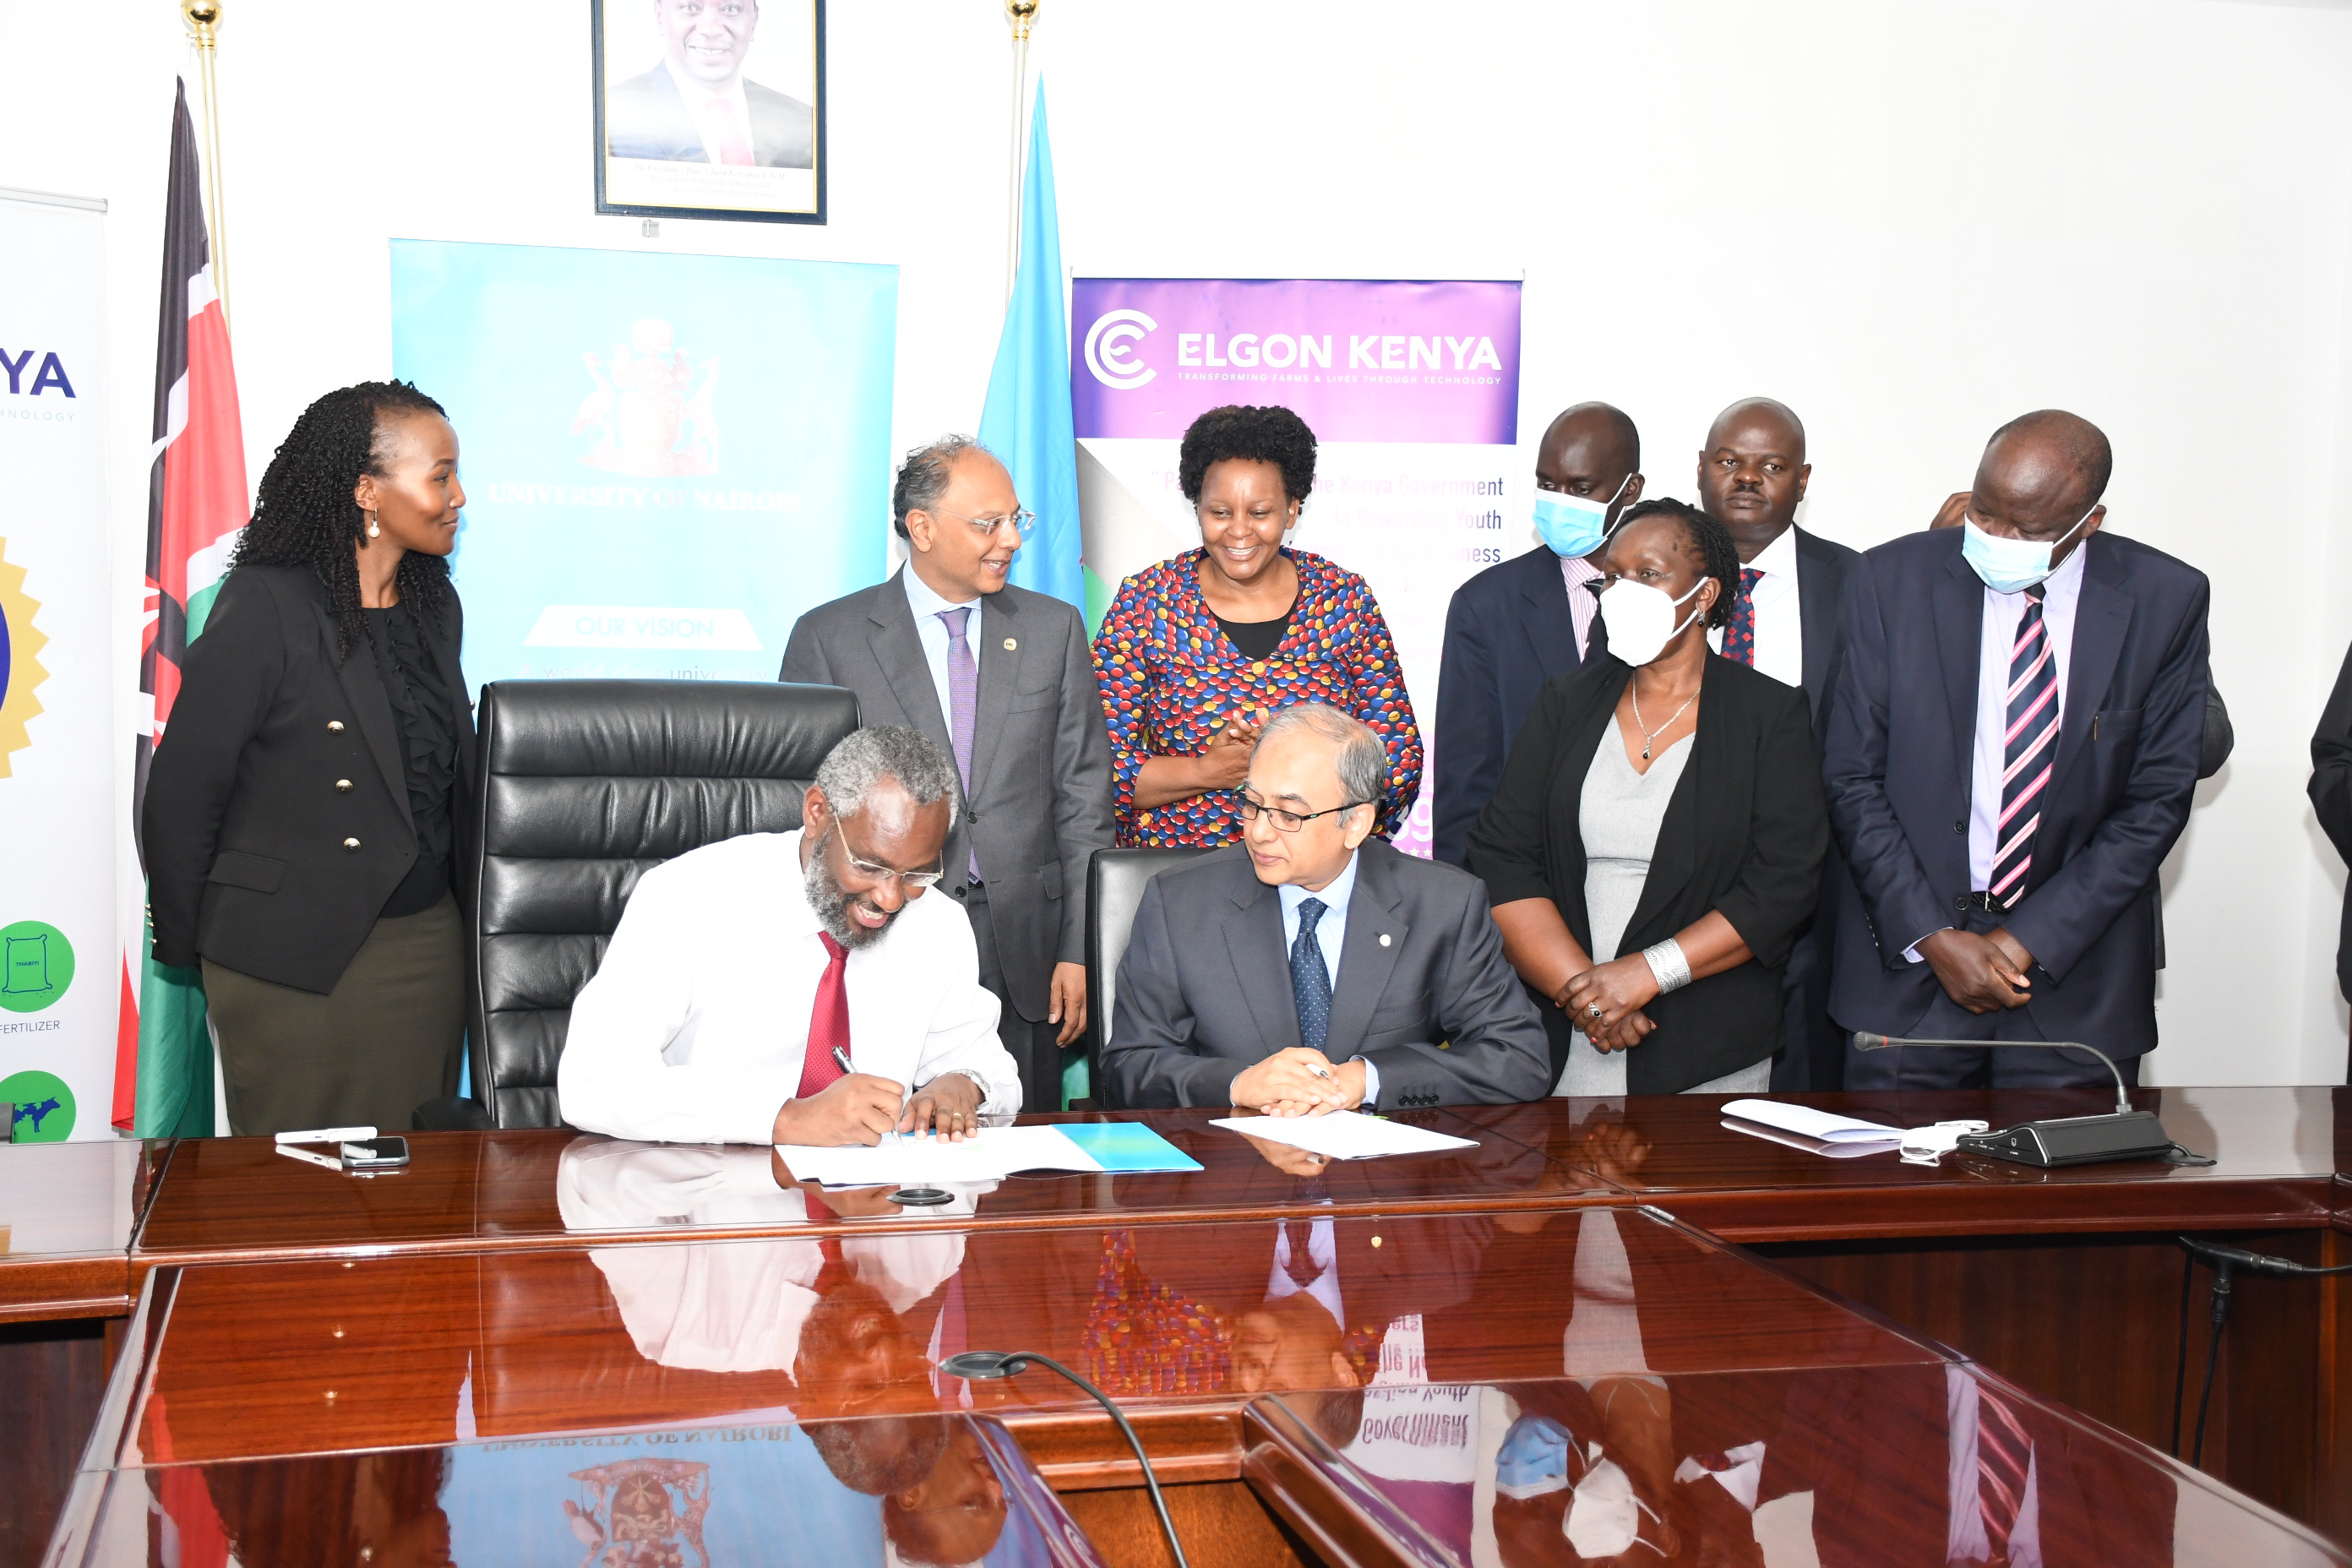 UoN and Elgon Kenya Collaborative Agreement Signing